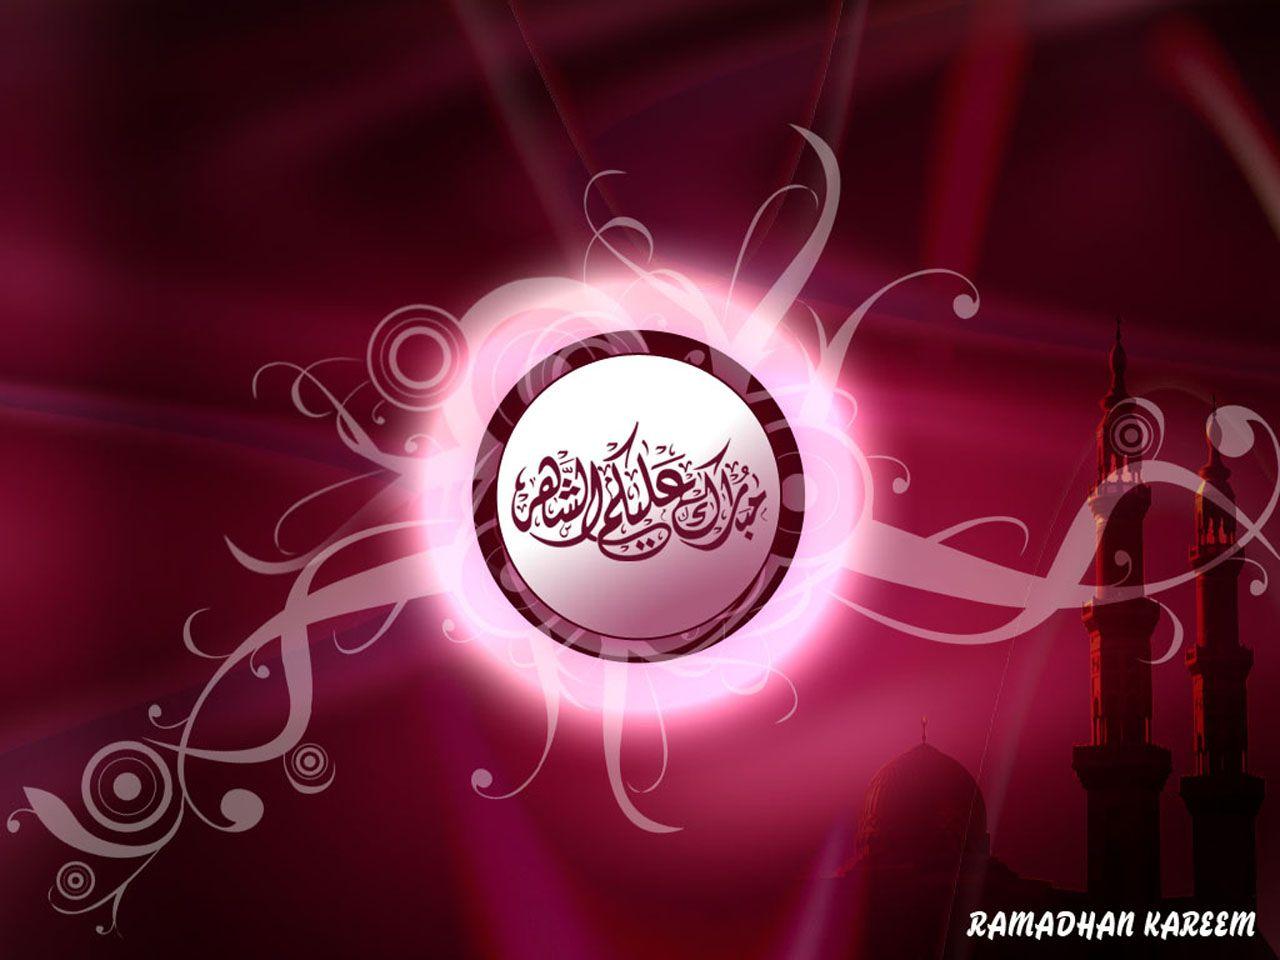 Beautiful Ramadan Wallpaper for your desktop